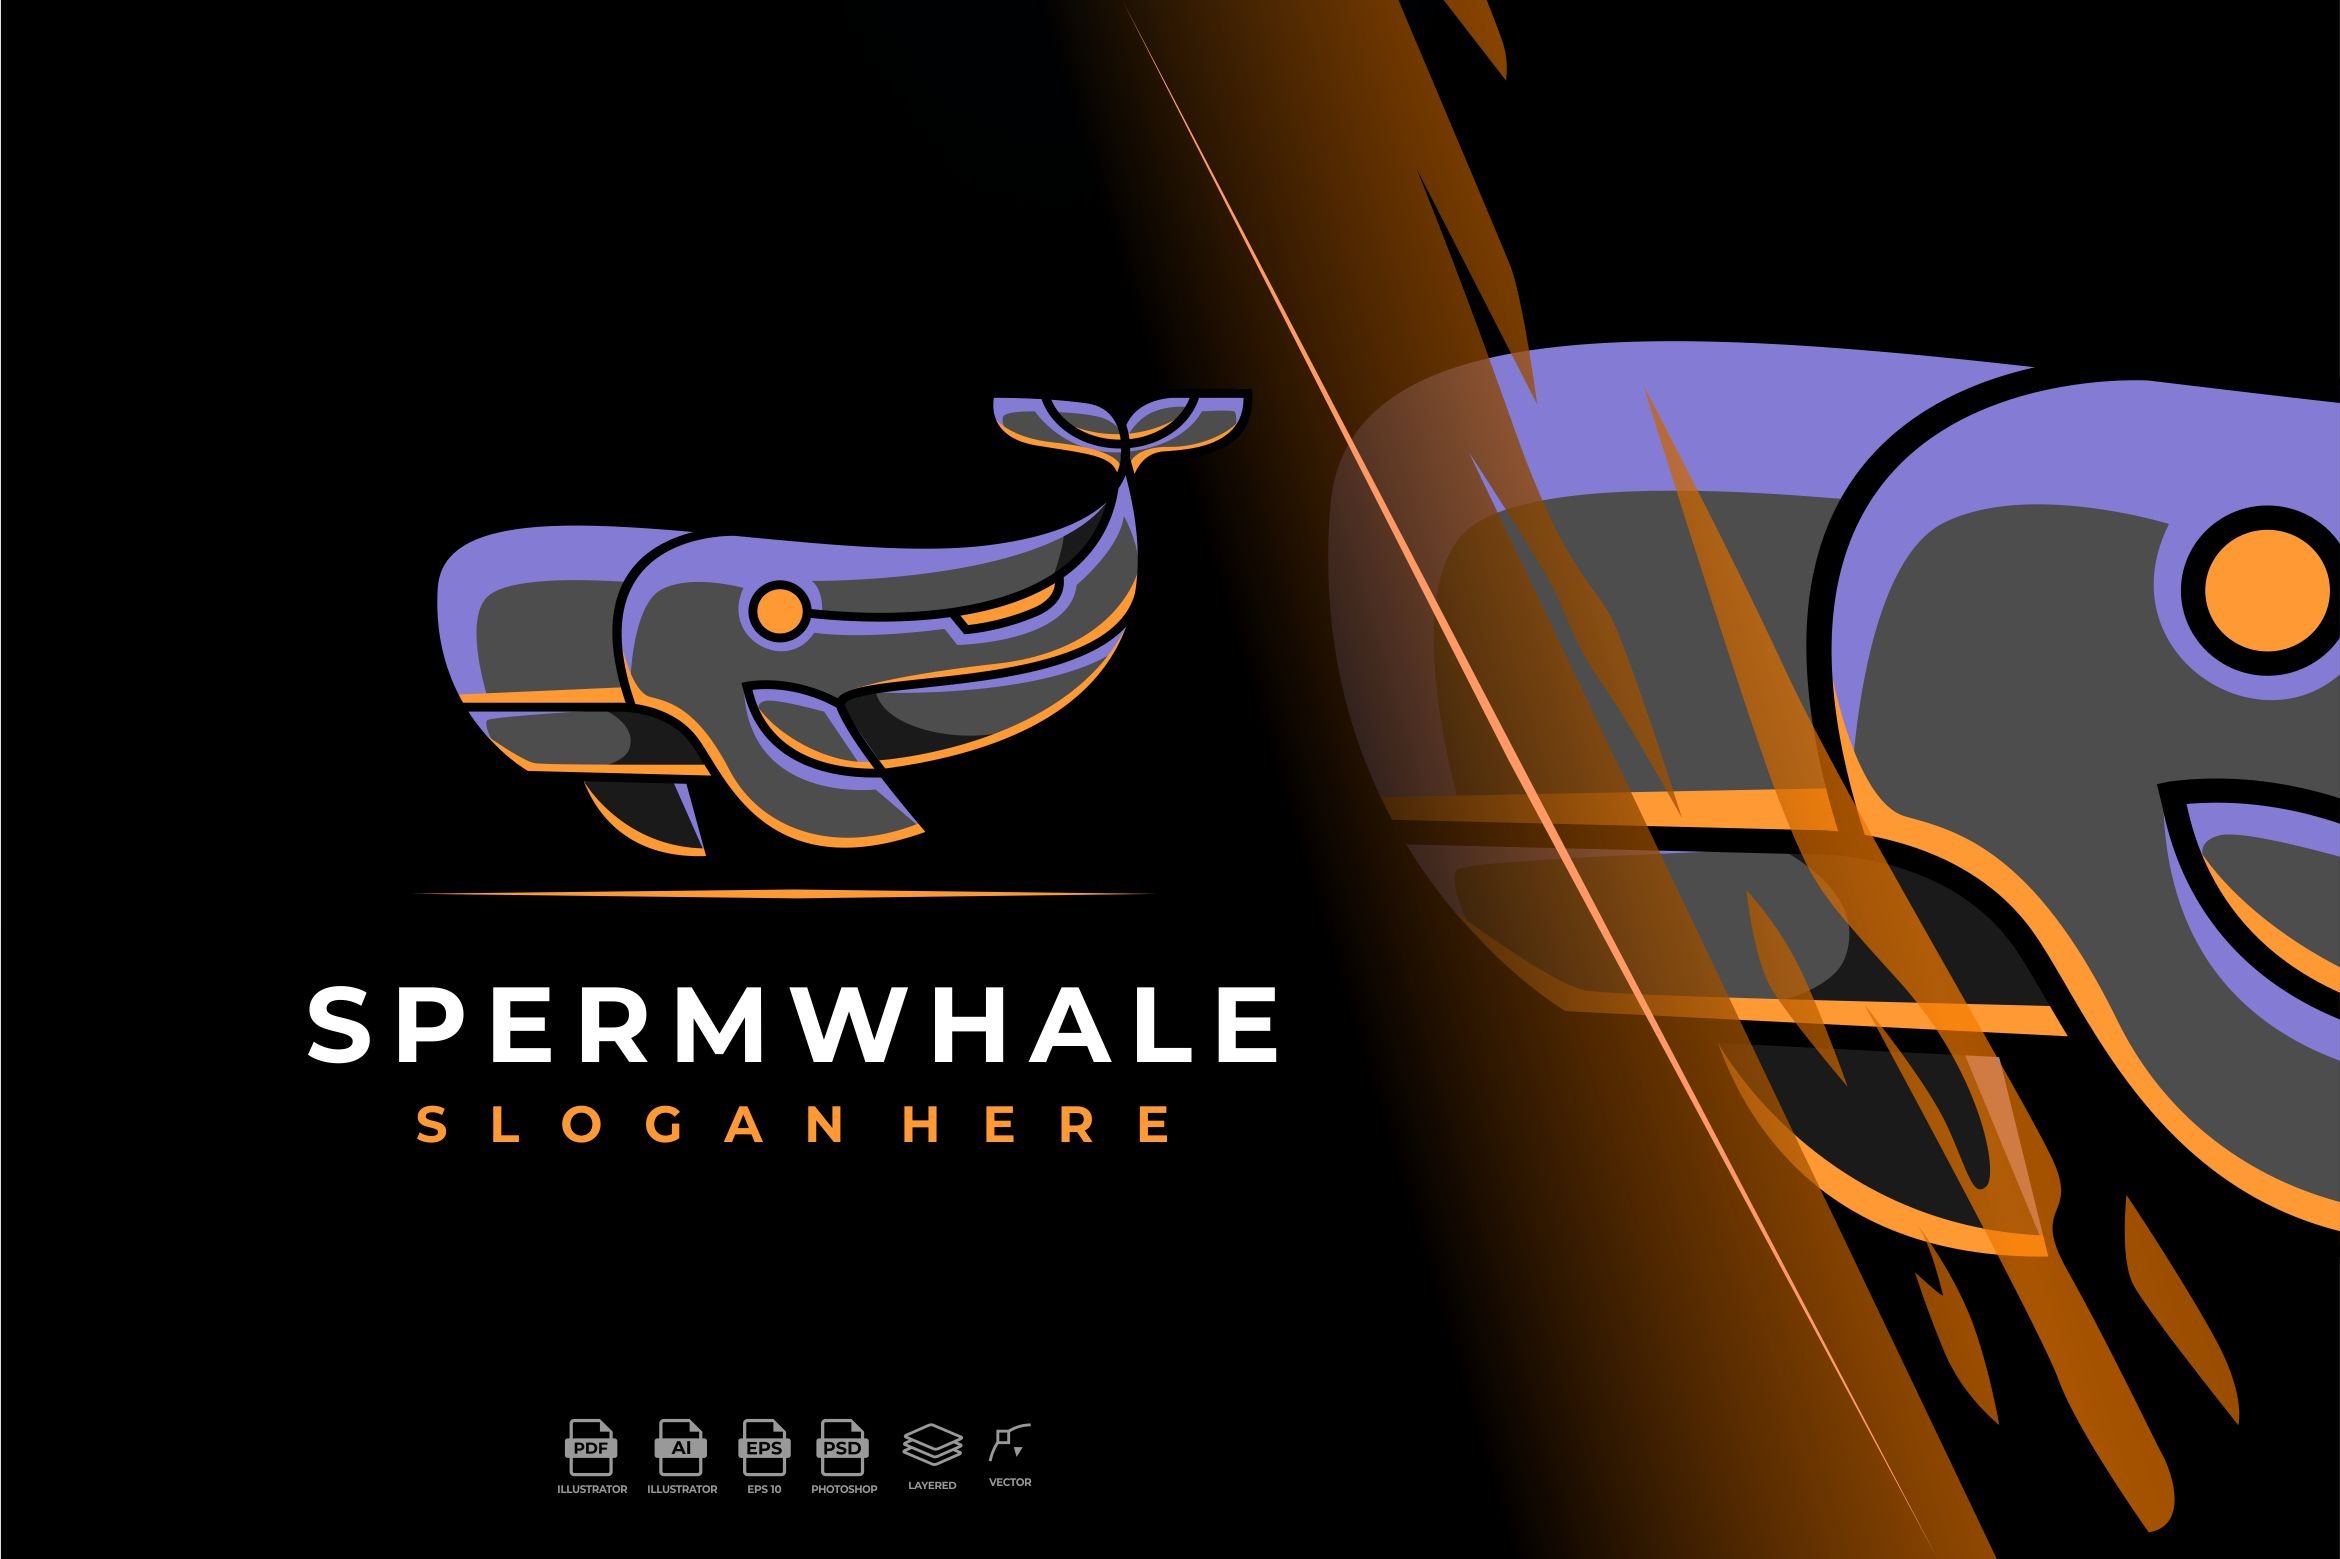 Modern Mecha Robot Sperm Whale Logo cover image.